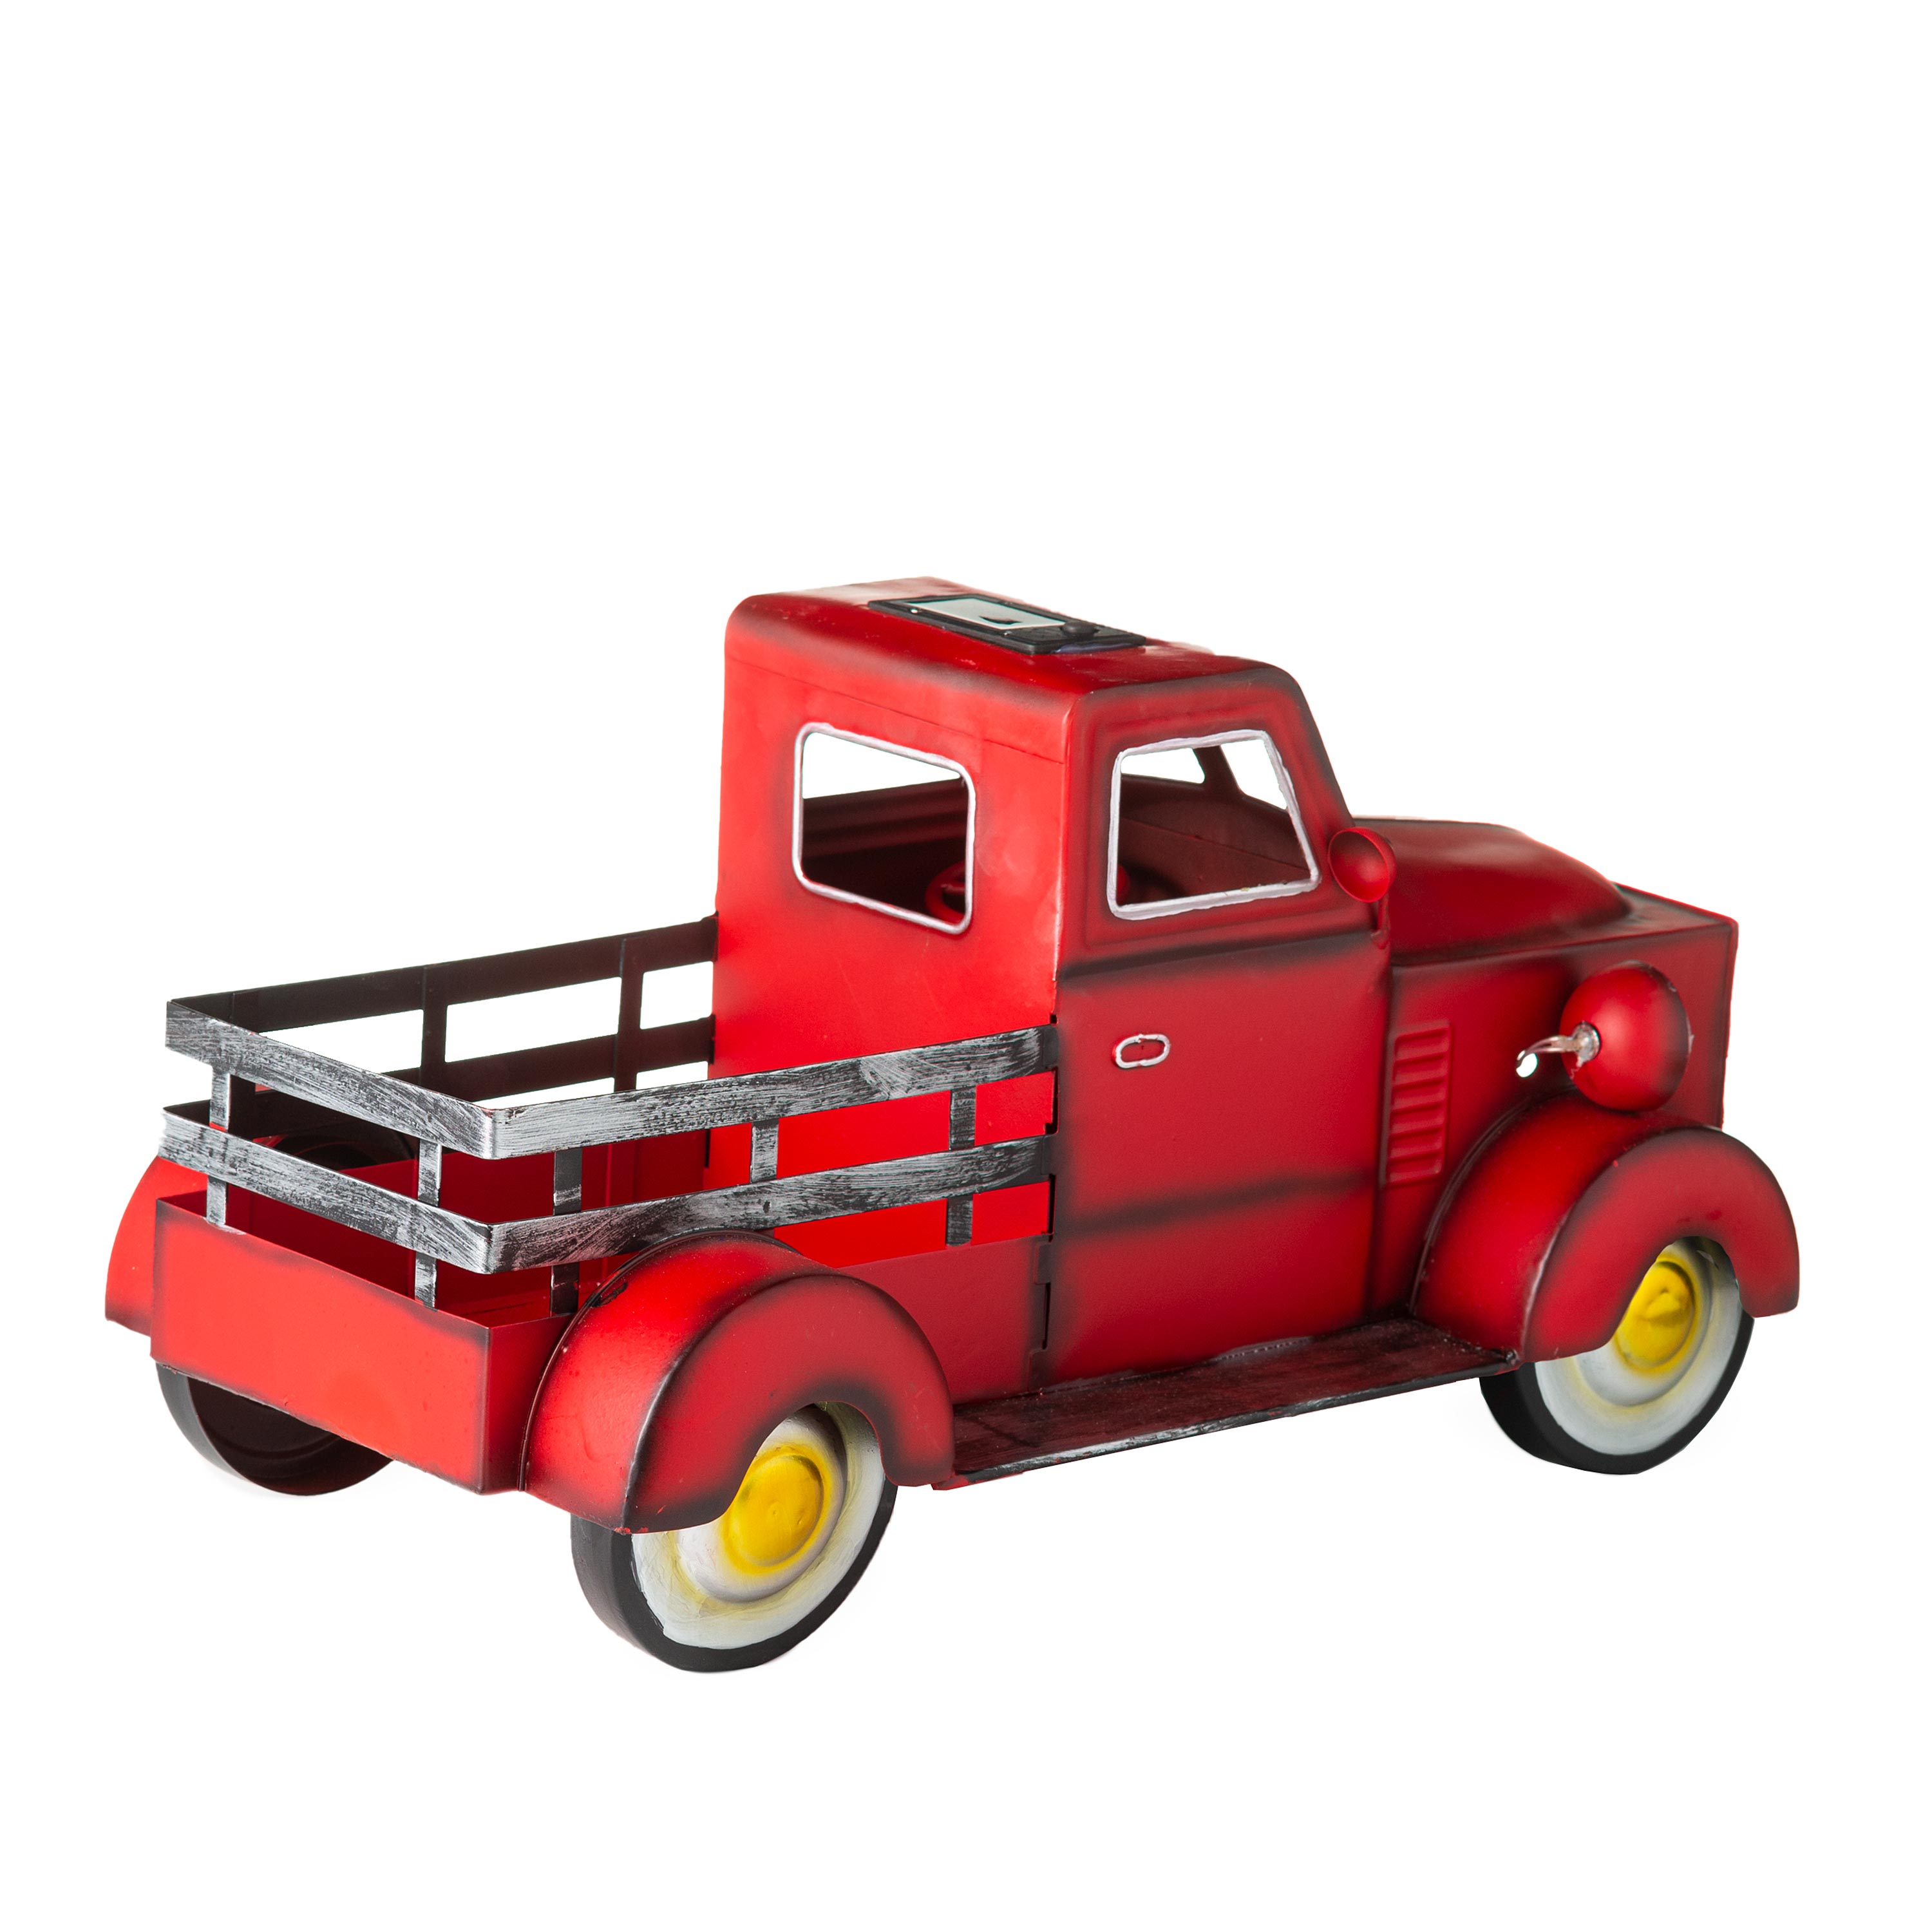 Vintage Style Solar Pickup Truck Planter